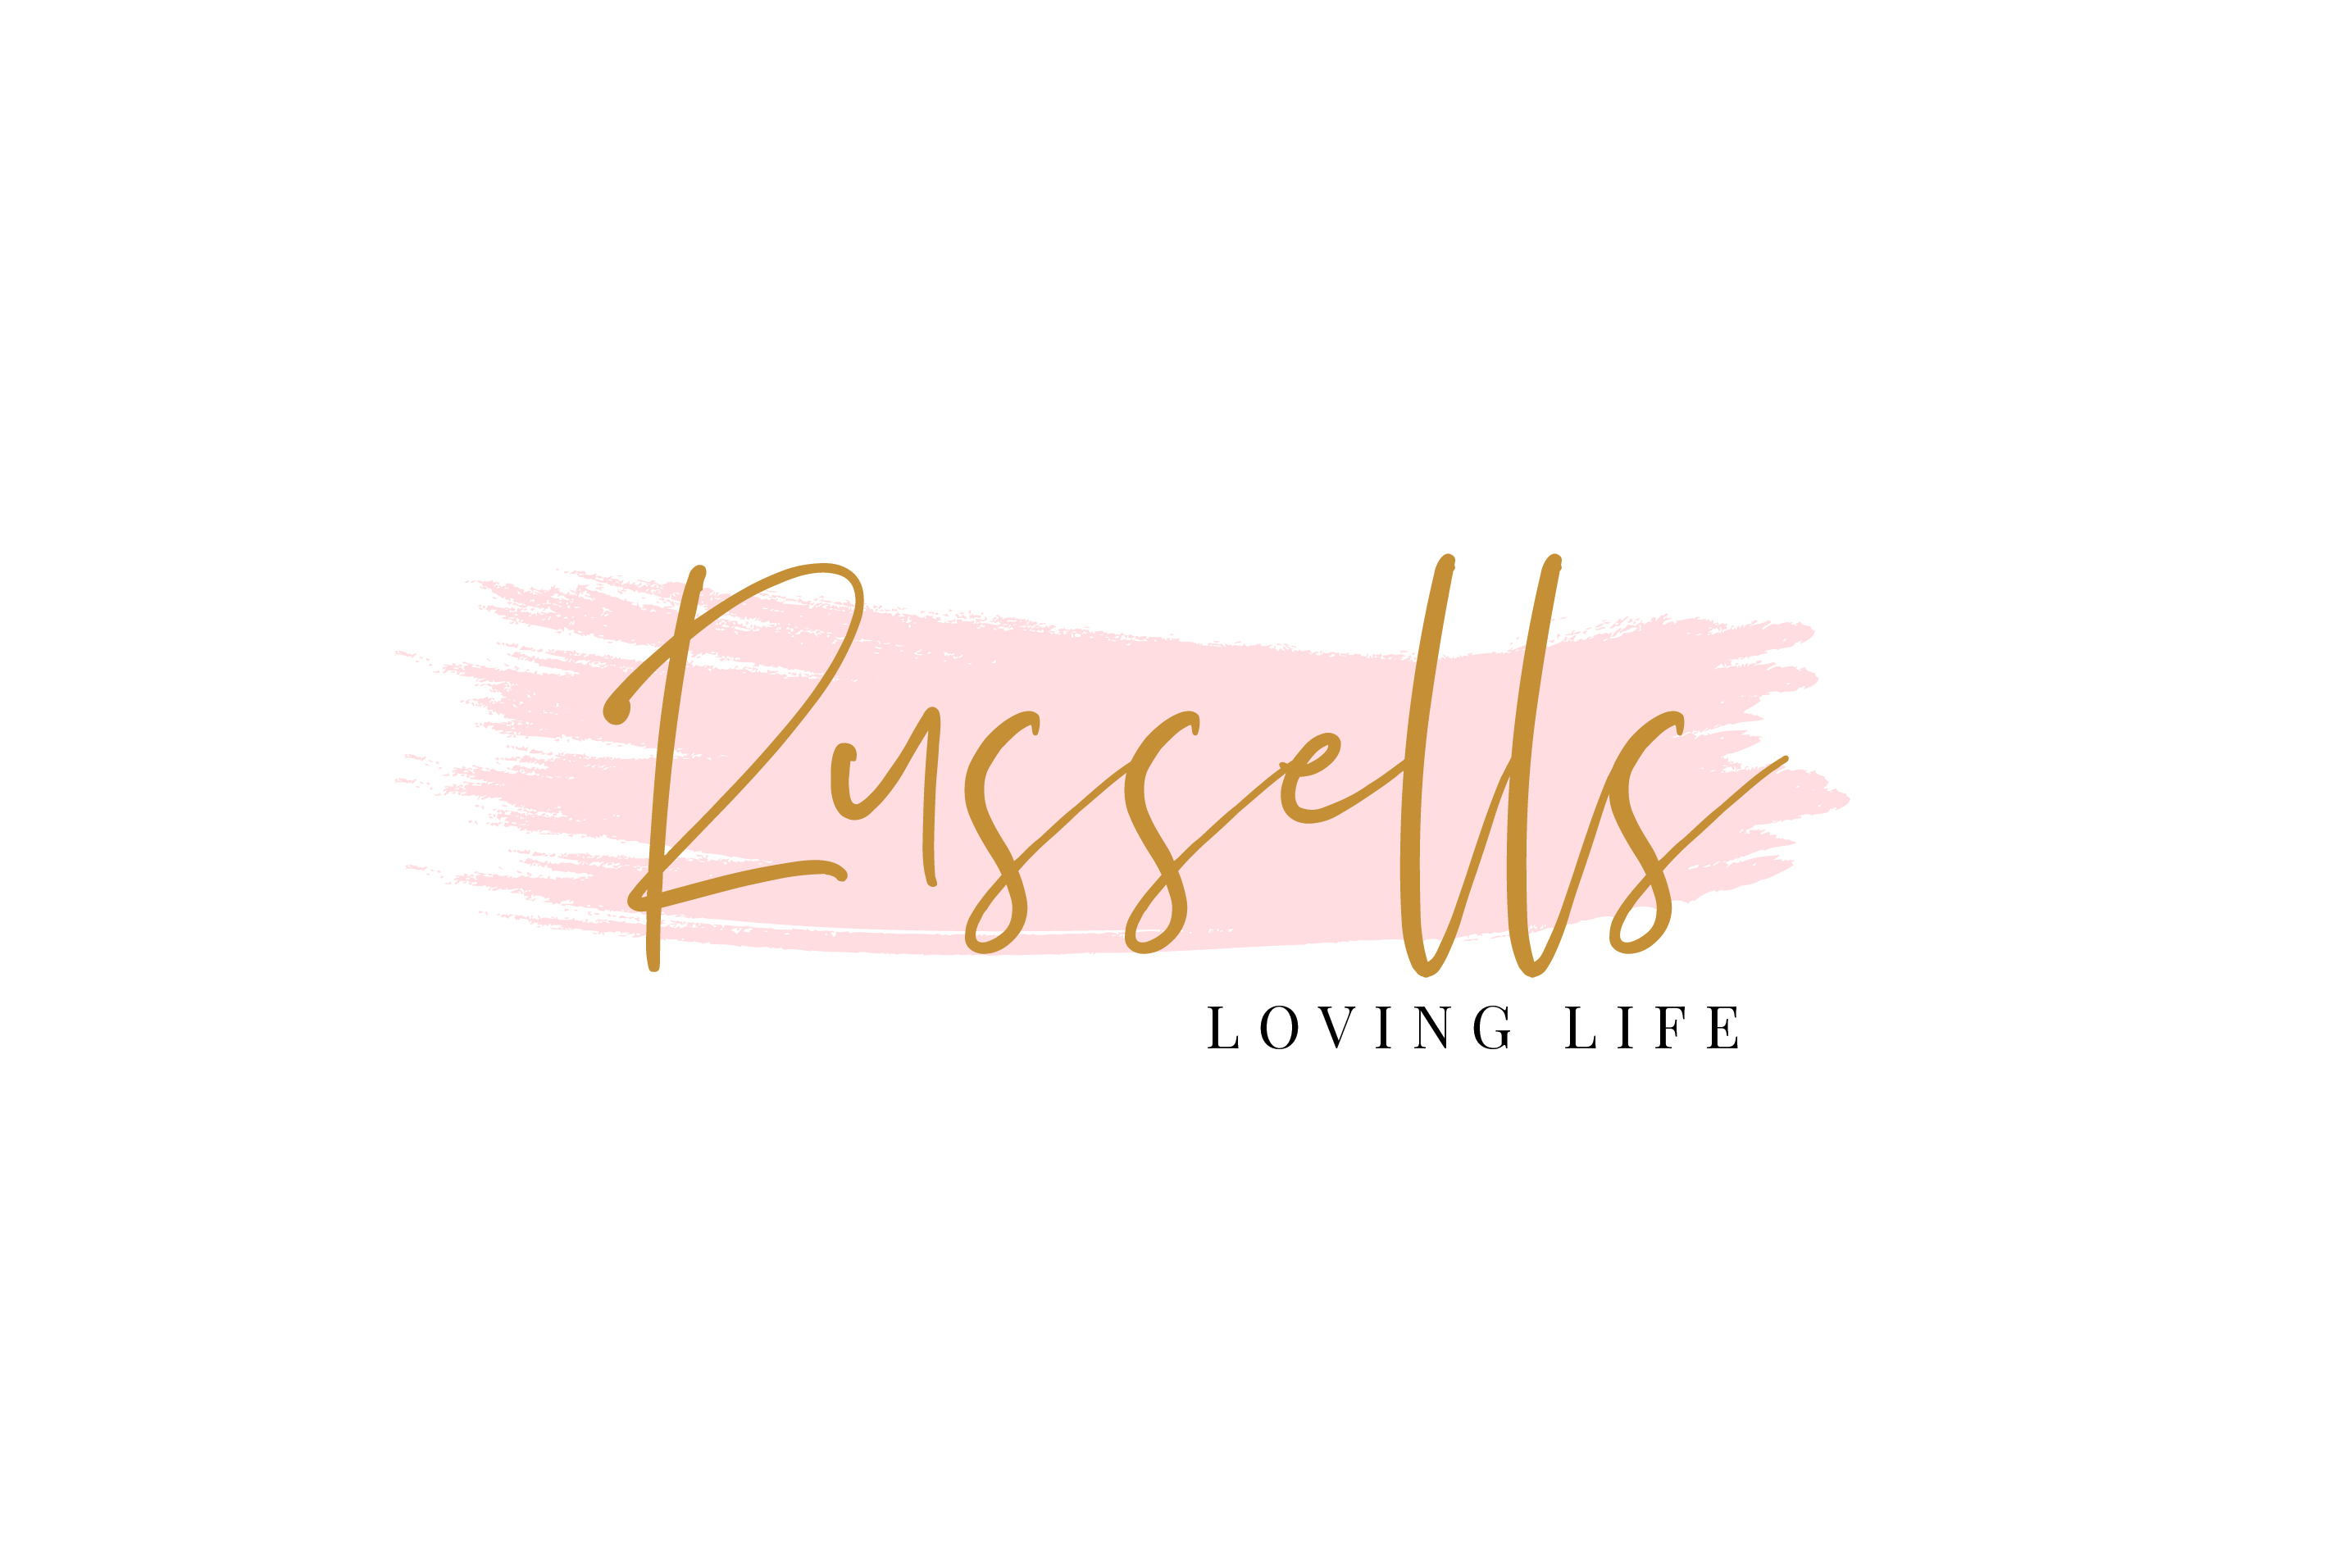 Russells Loving Life - Homeschool Mom